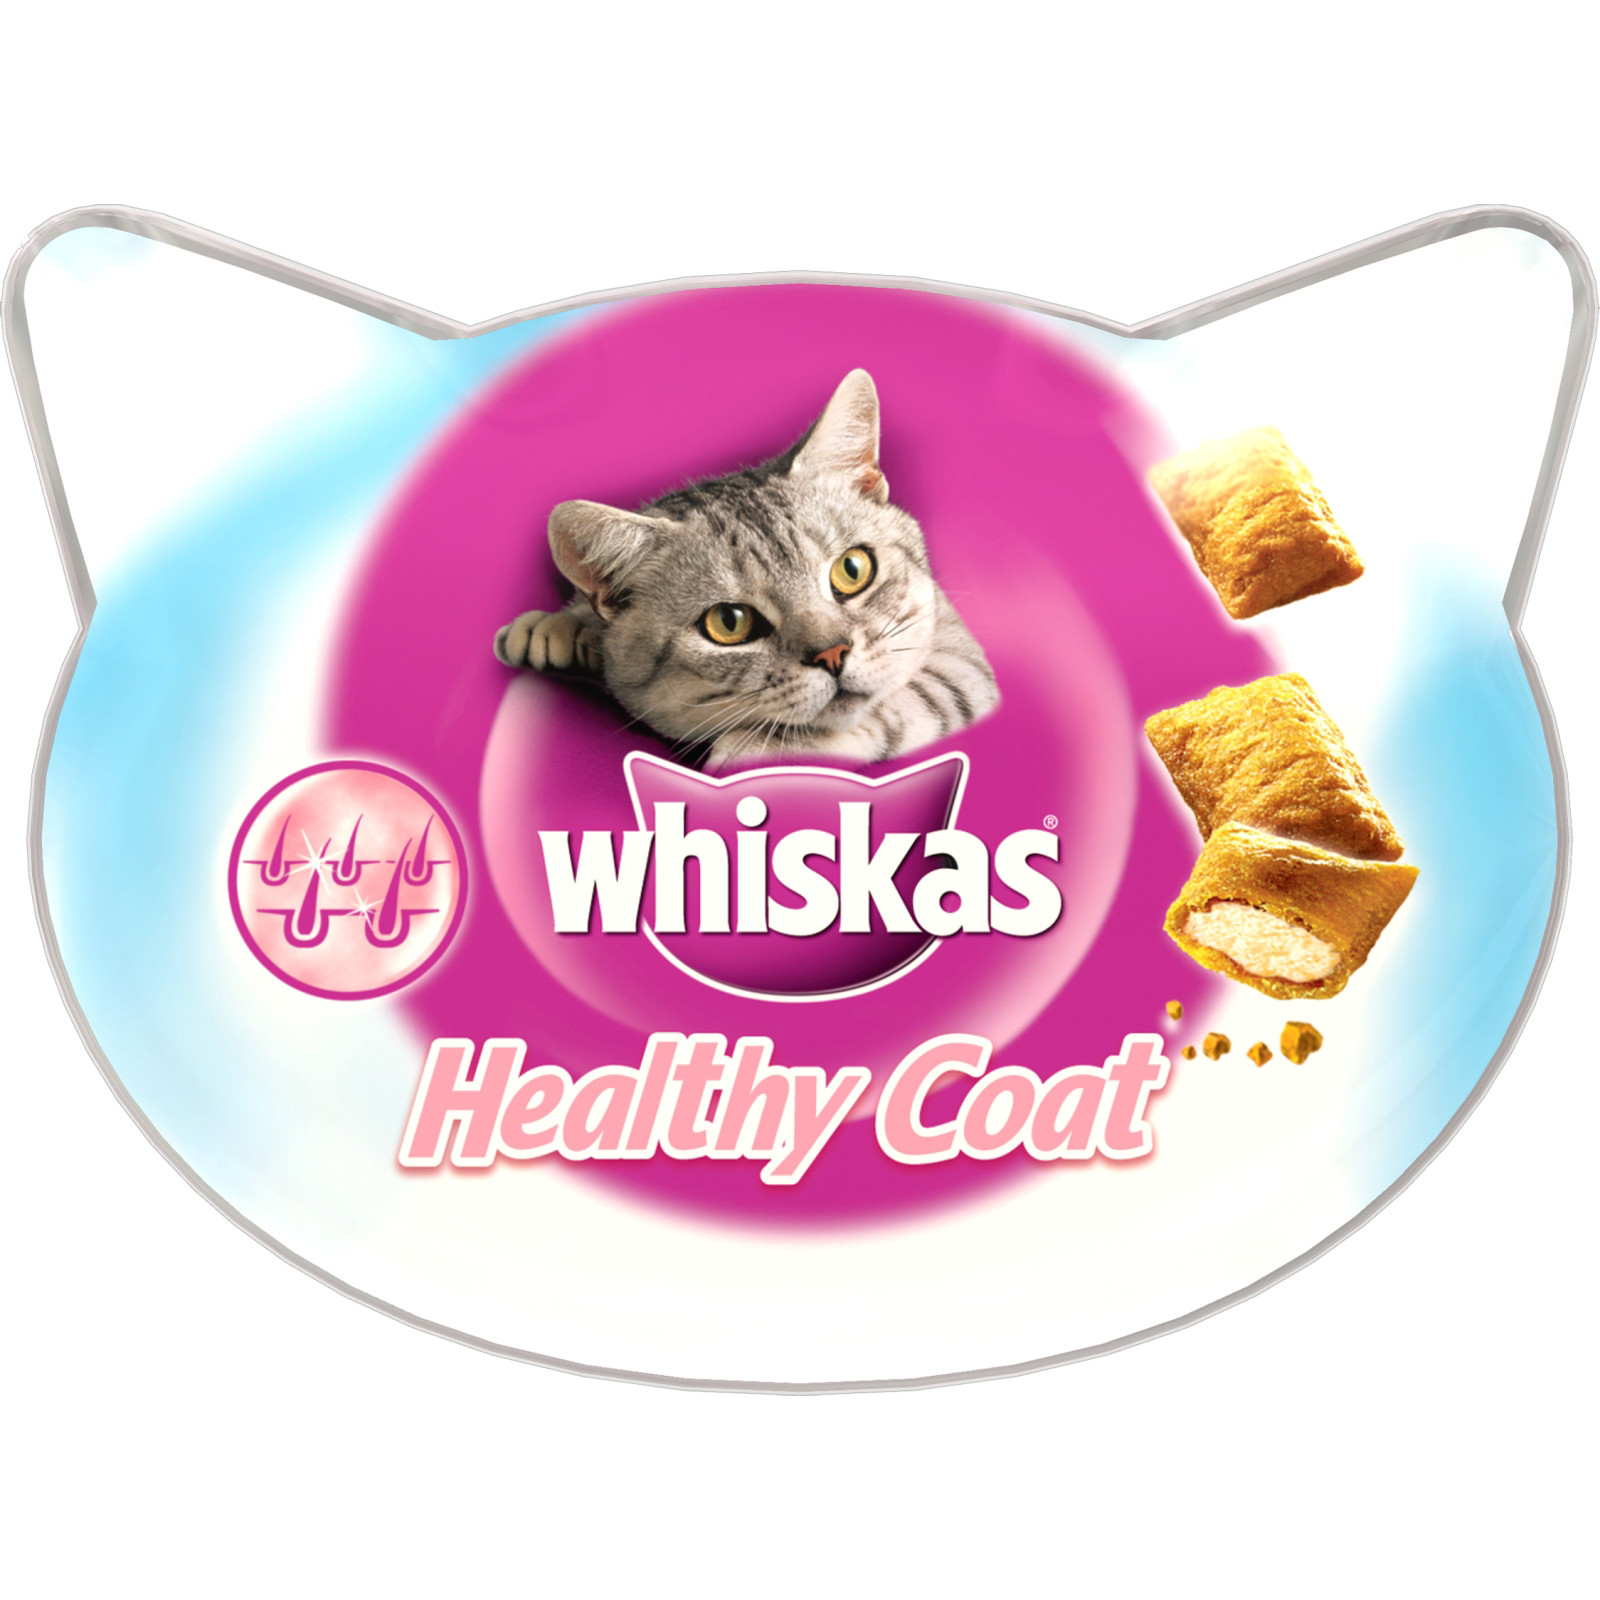 Healthy Cat Snacks
 Whiskas Healthy Coat Adult Cat Treats From £1 00